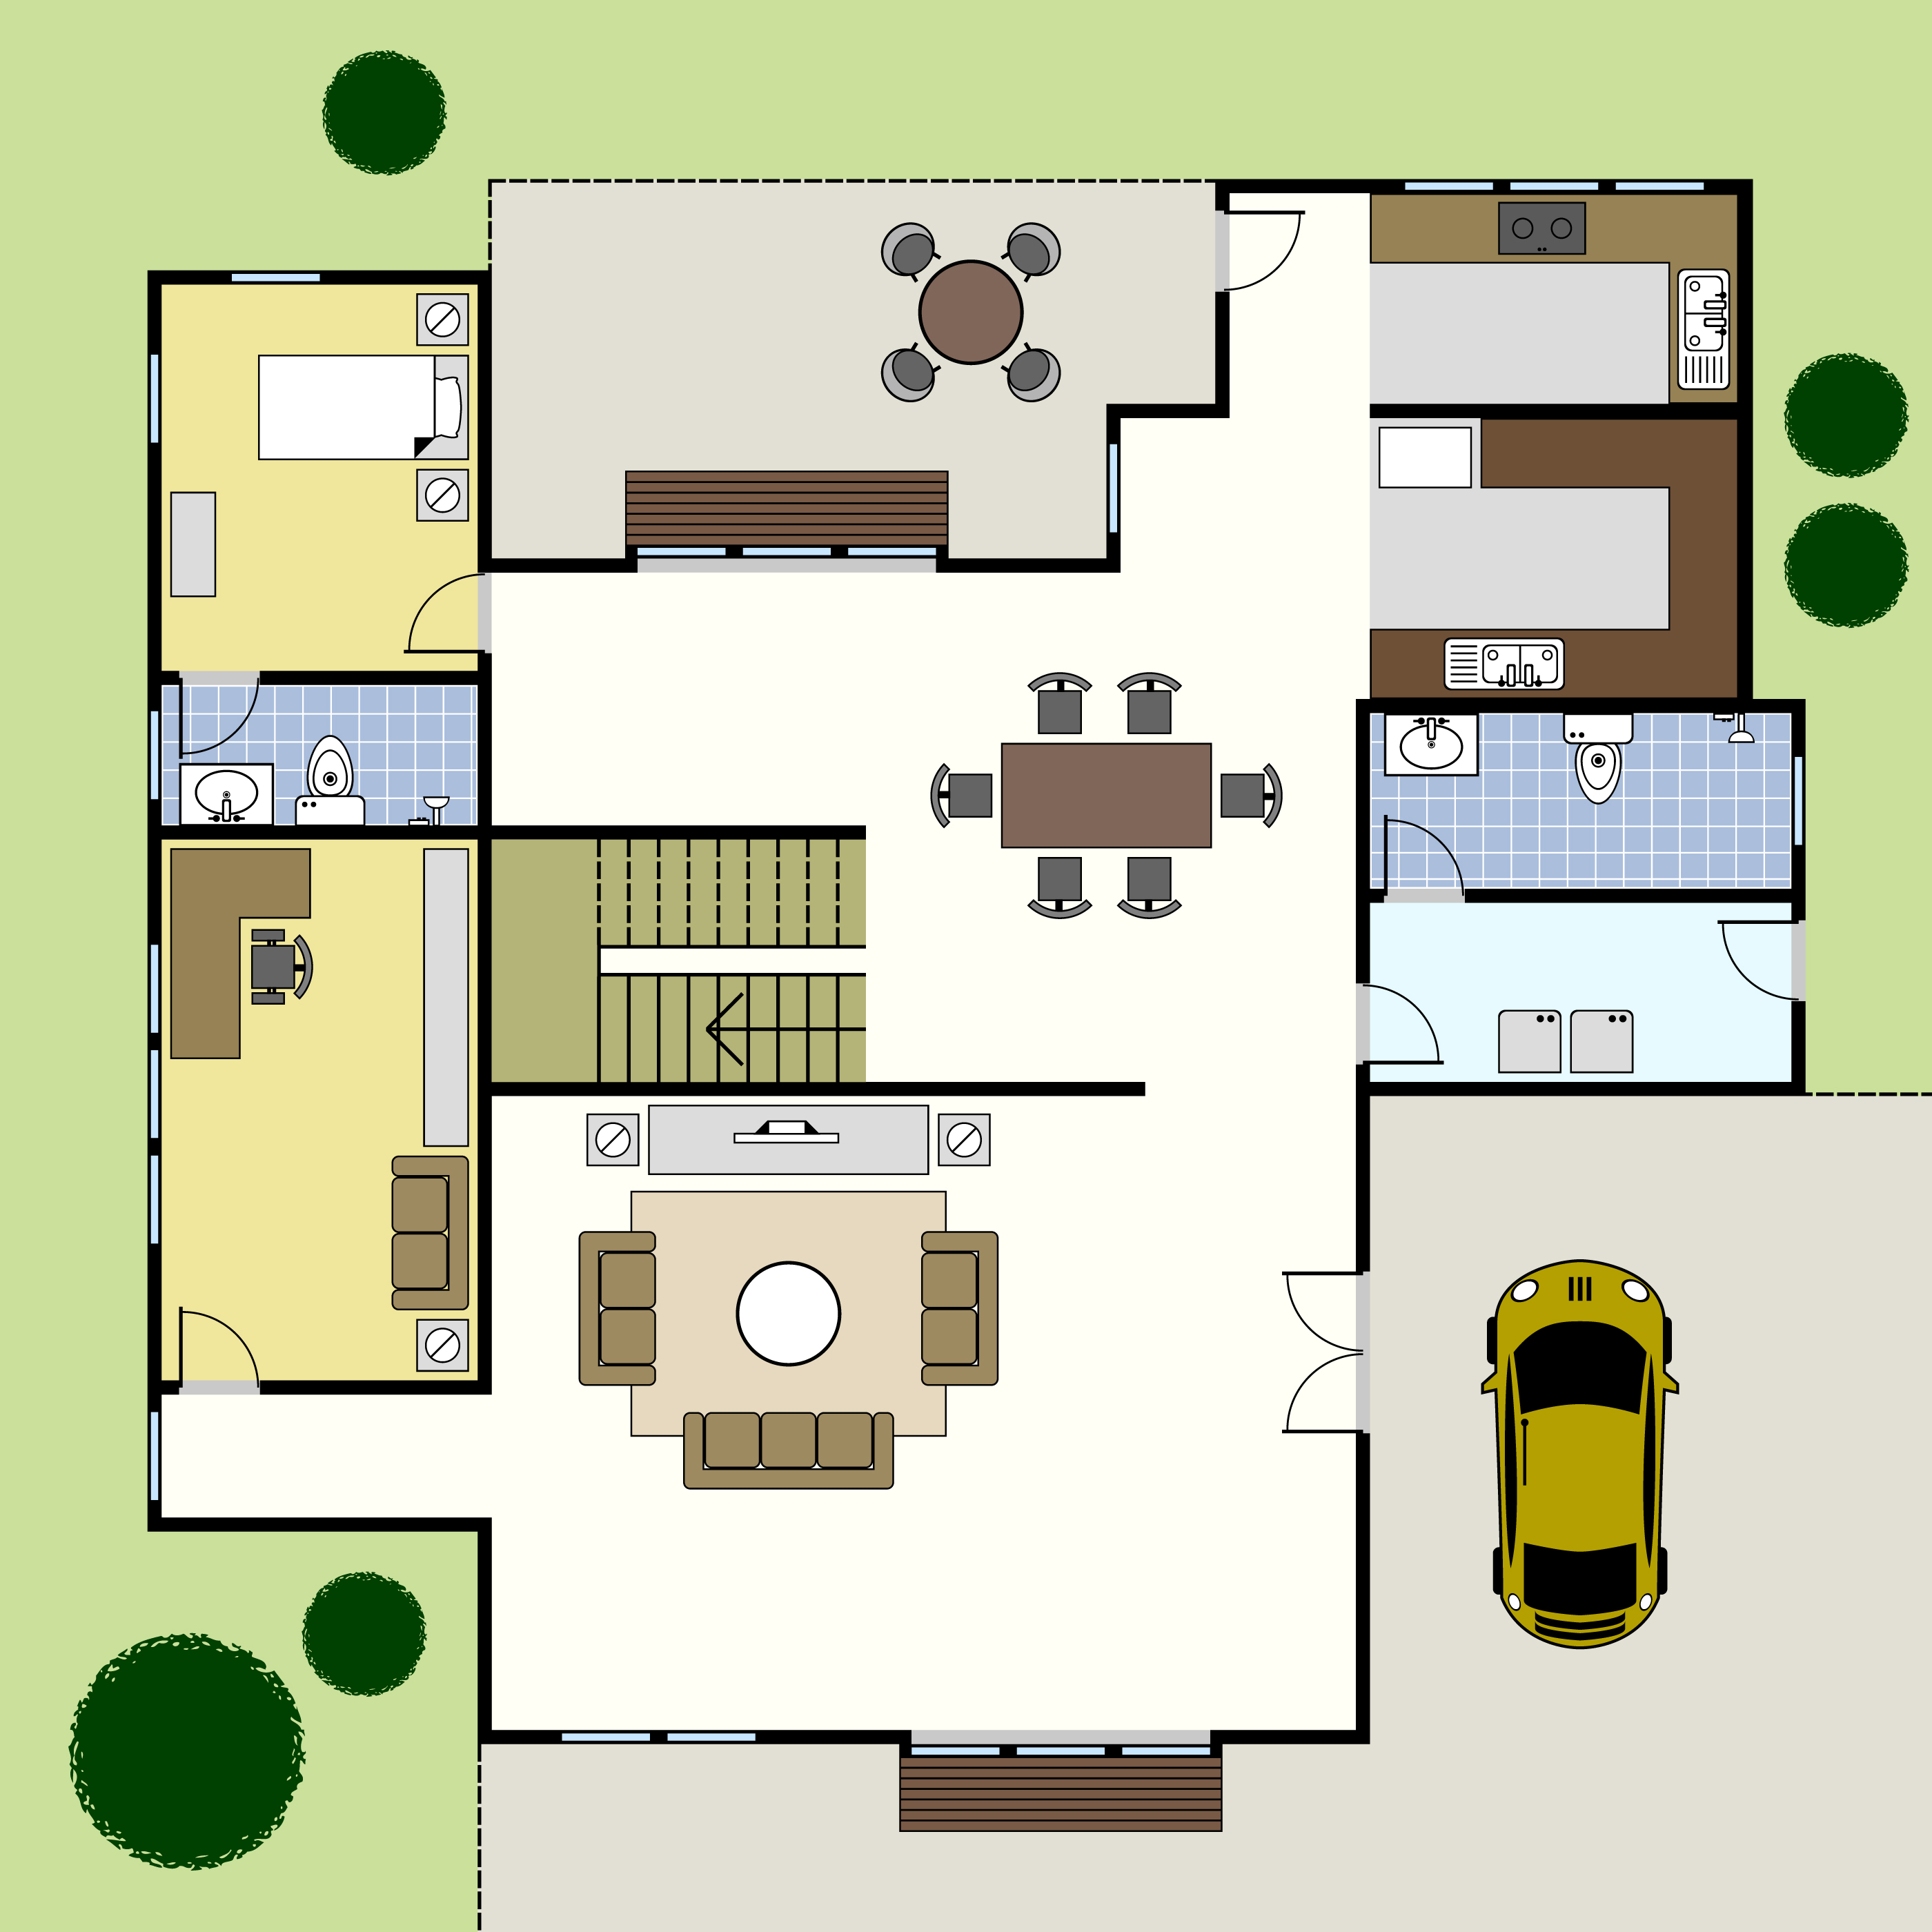 Floorplan Architecture Plan House. Download Free Vectors